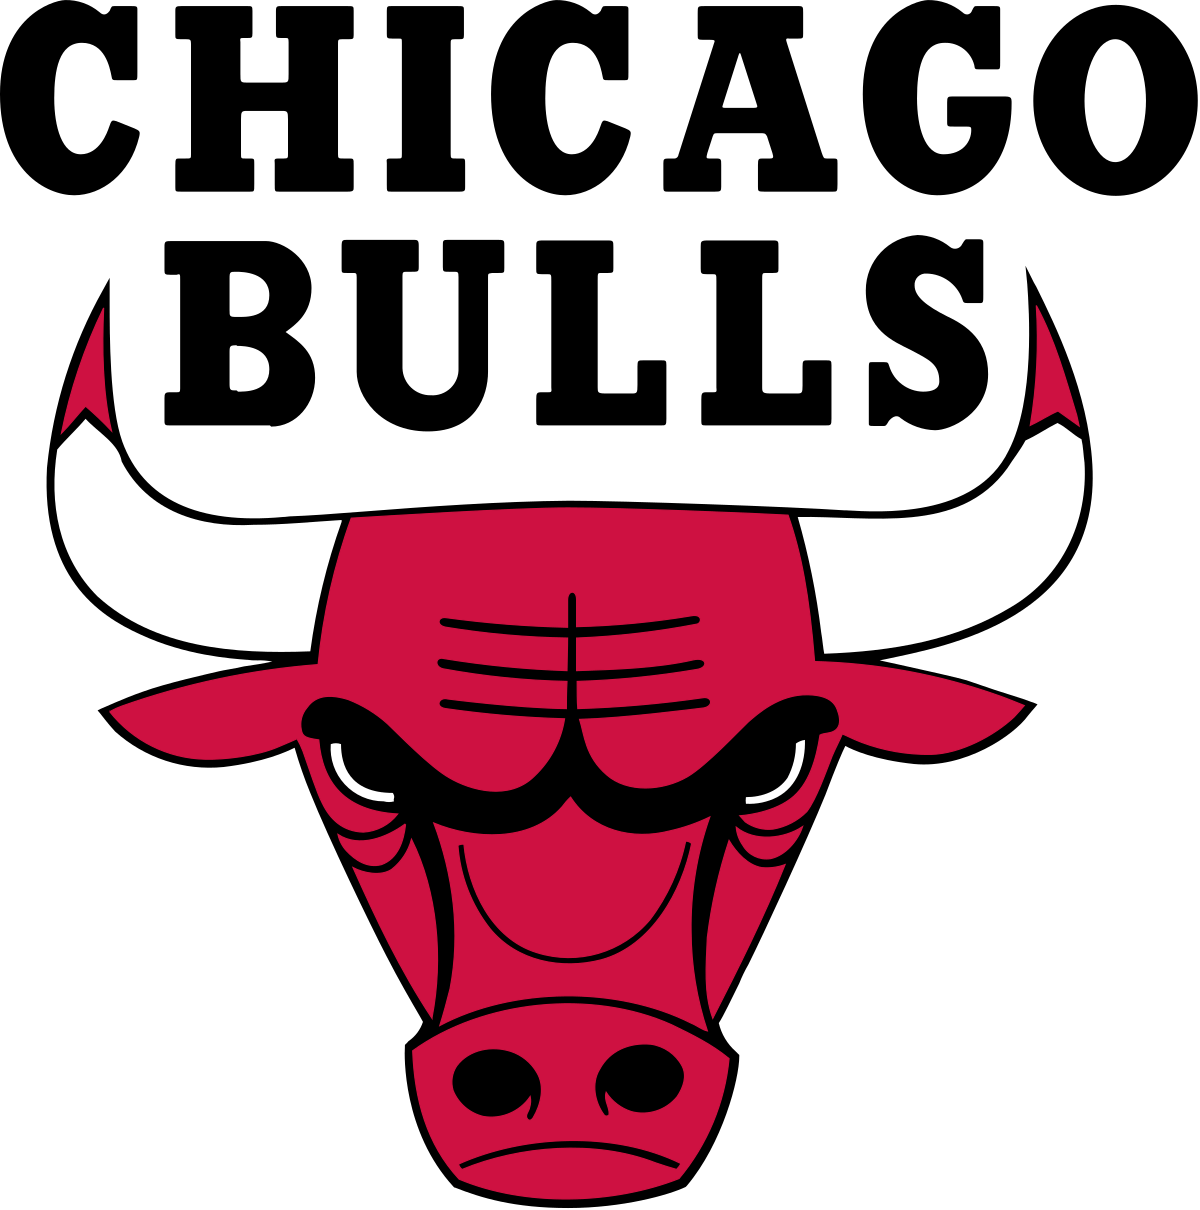 Two Bulls Logo - Chicago Bulls